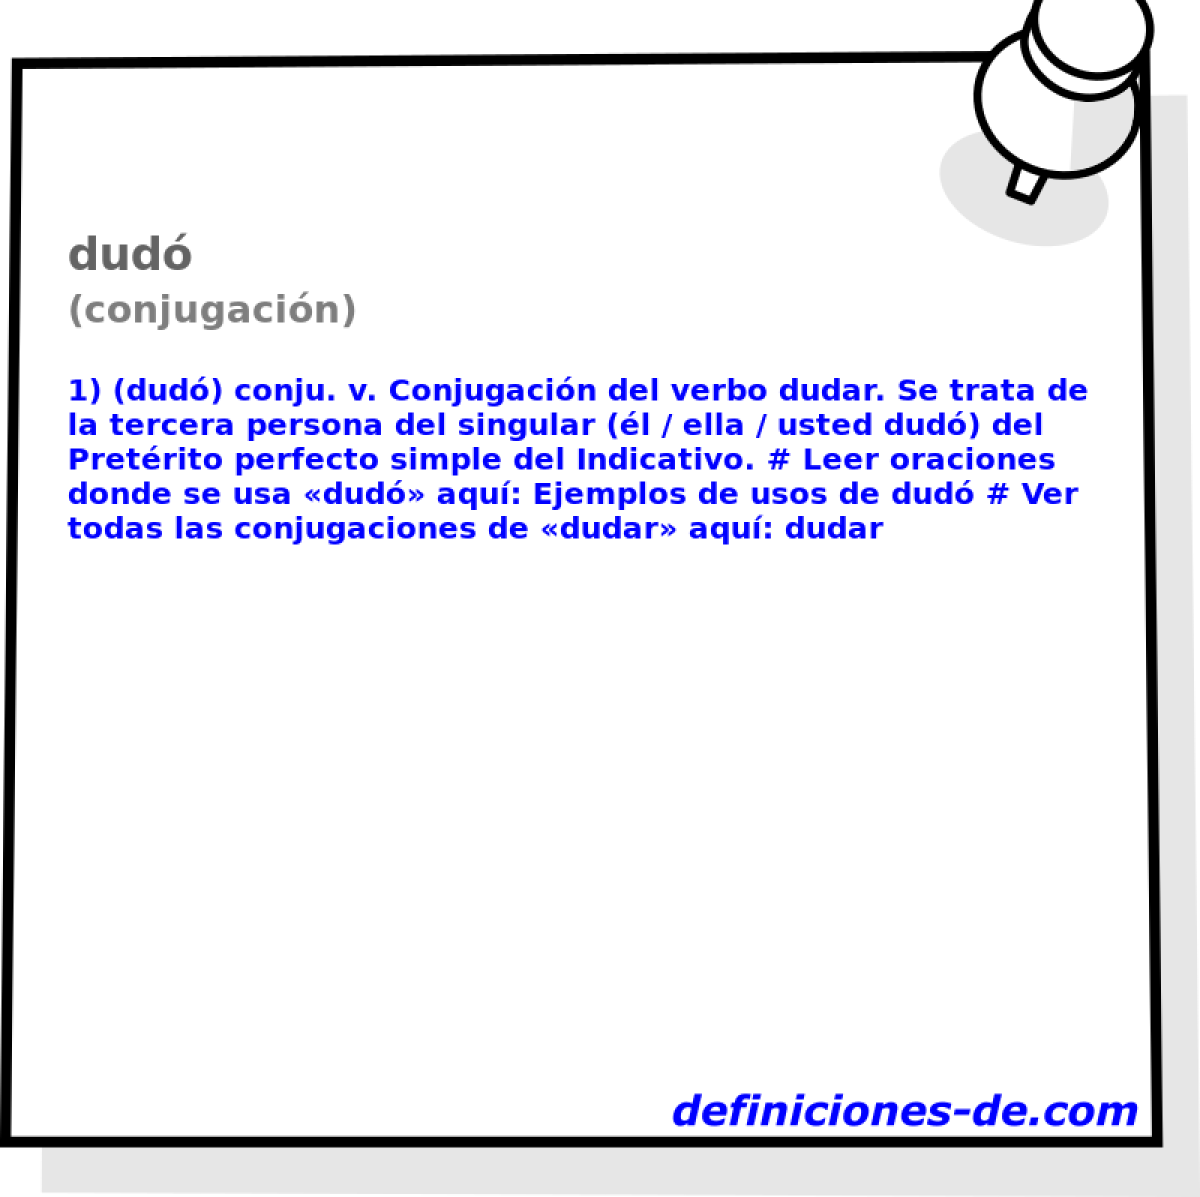 dud (conjugacin)